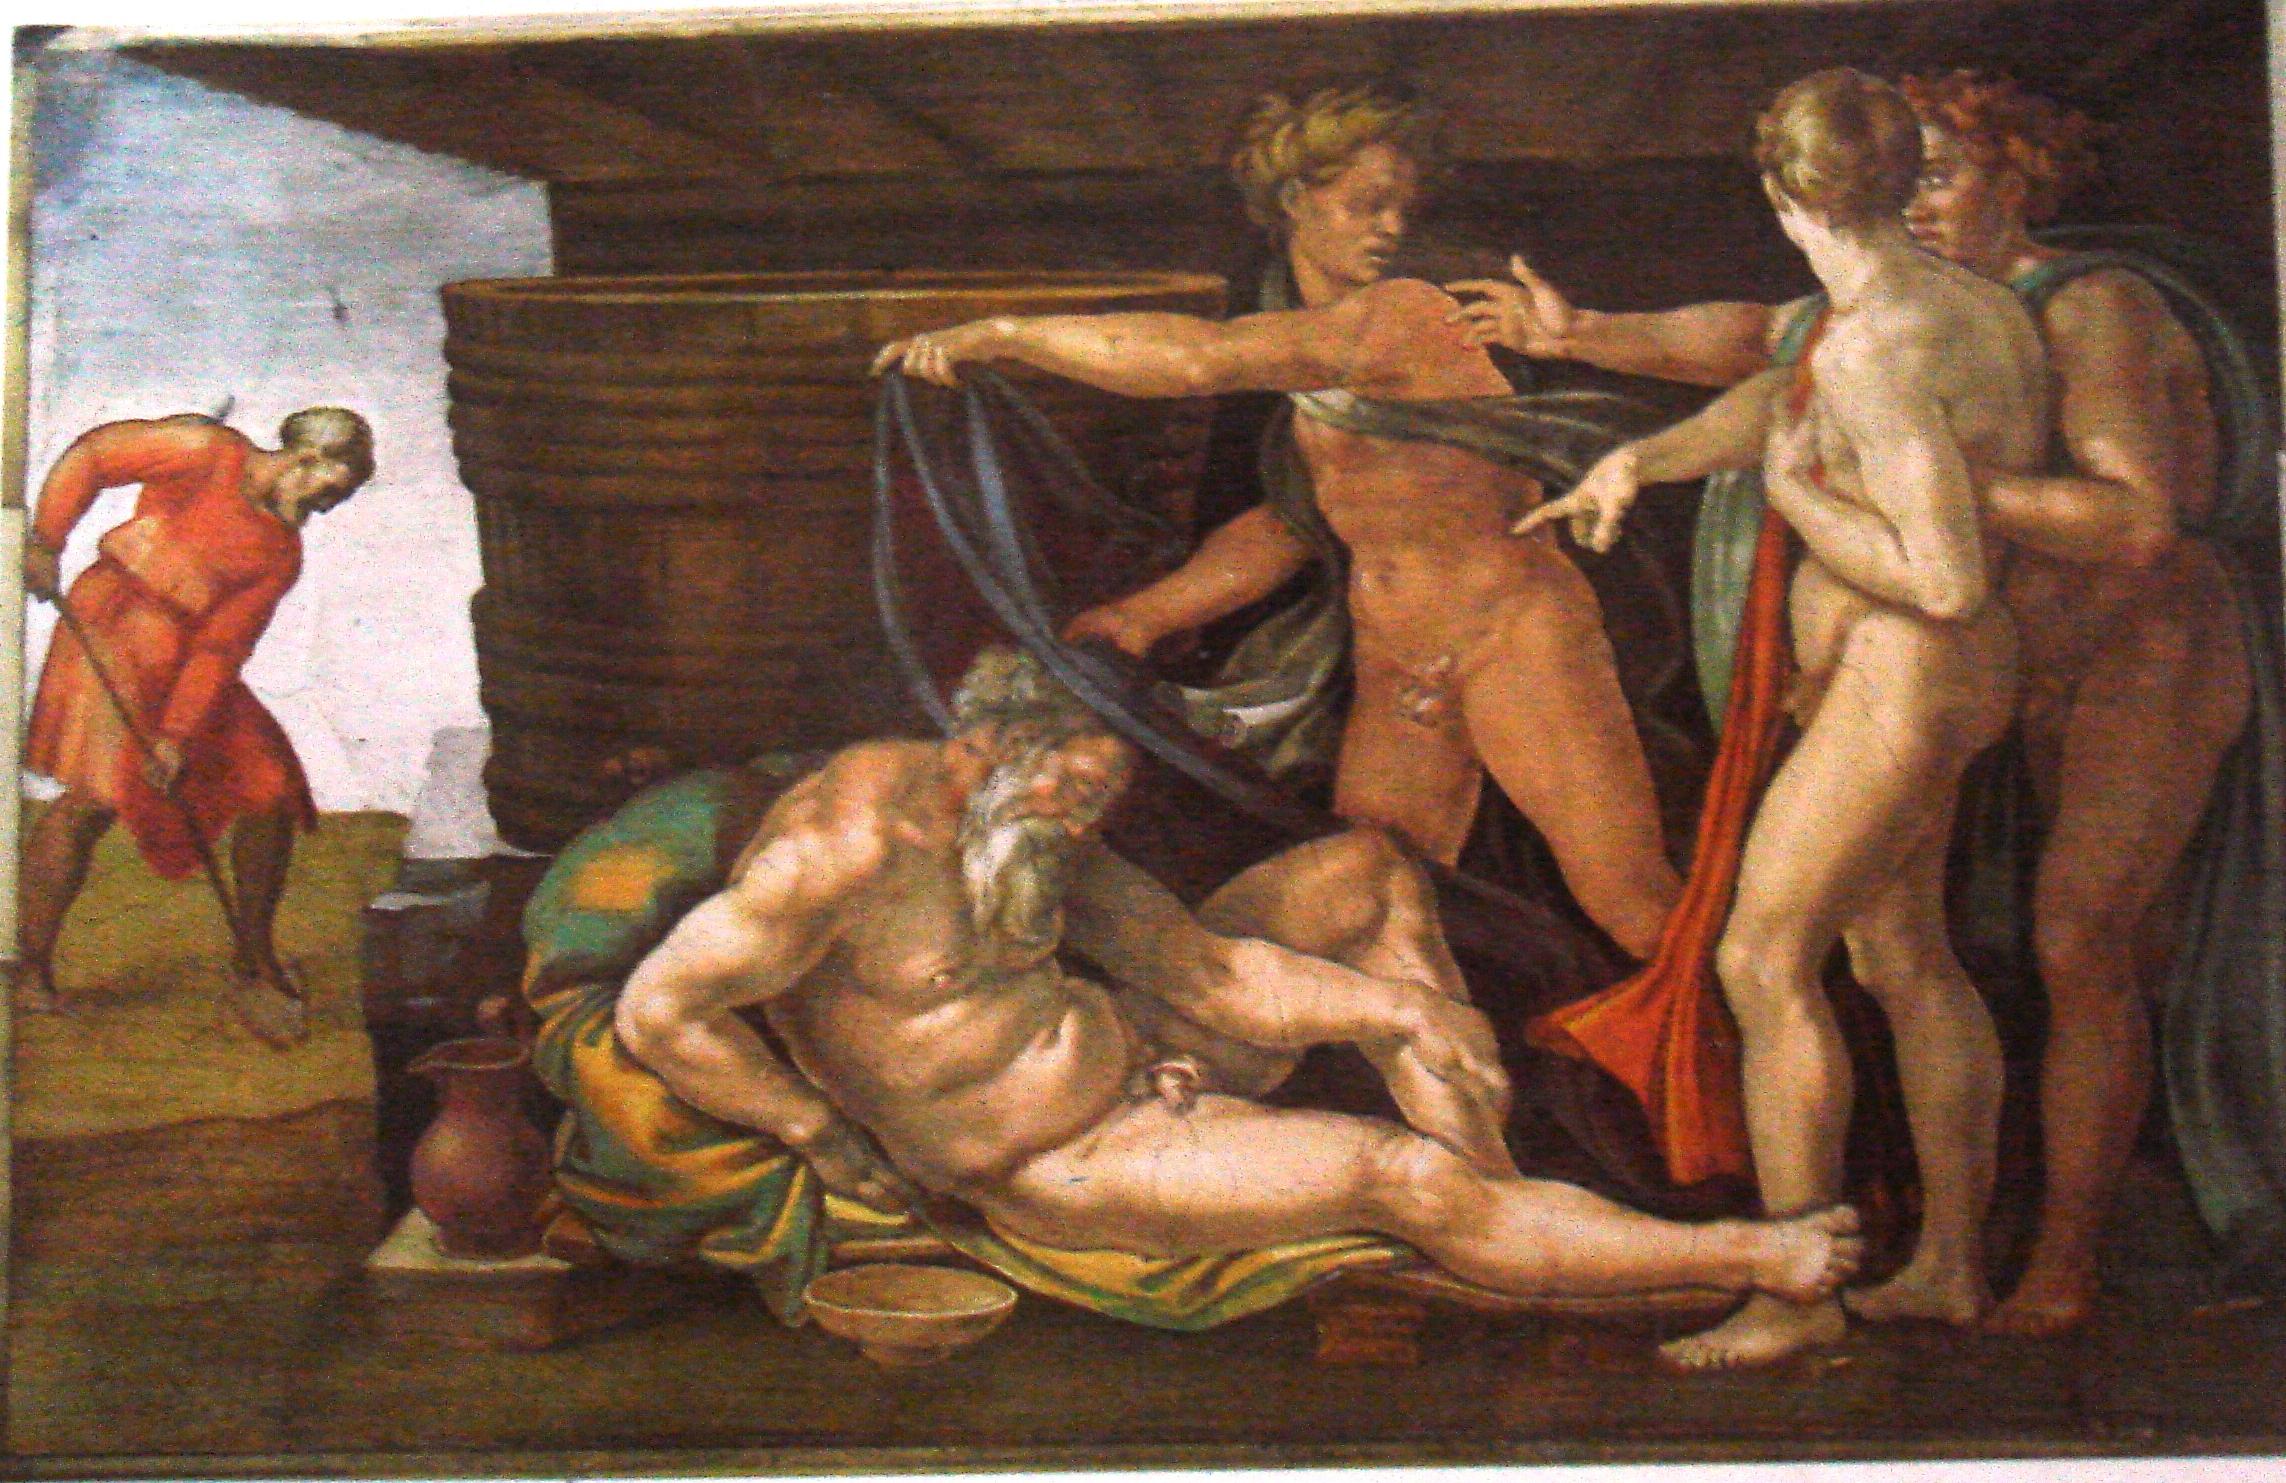 Sistine Chapel, Vatican, Michelangelo fresco, The Drunkenness of Noah